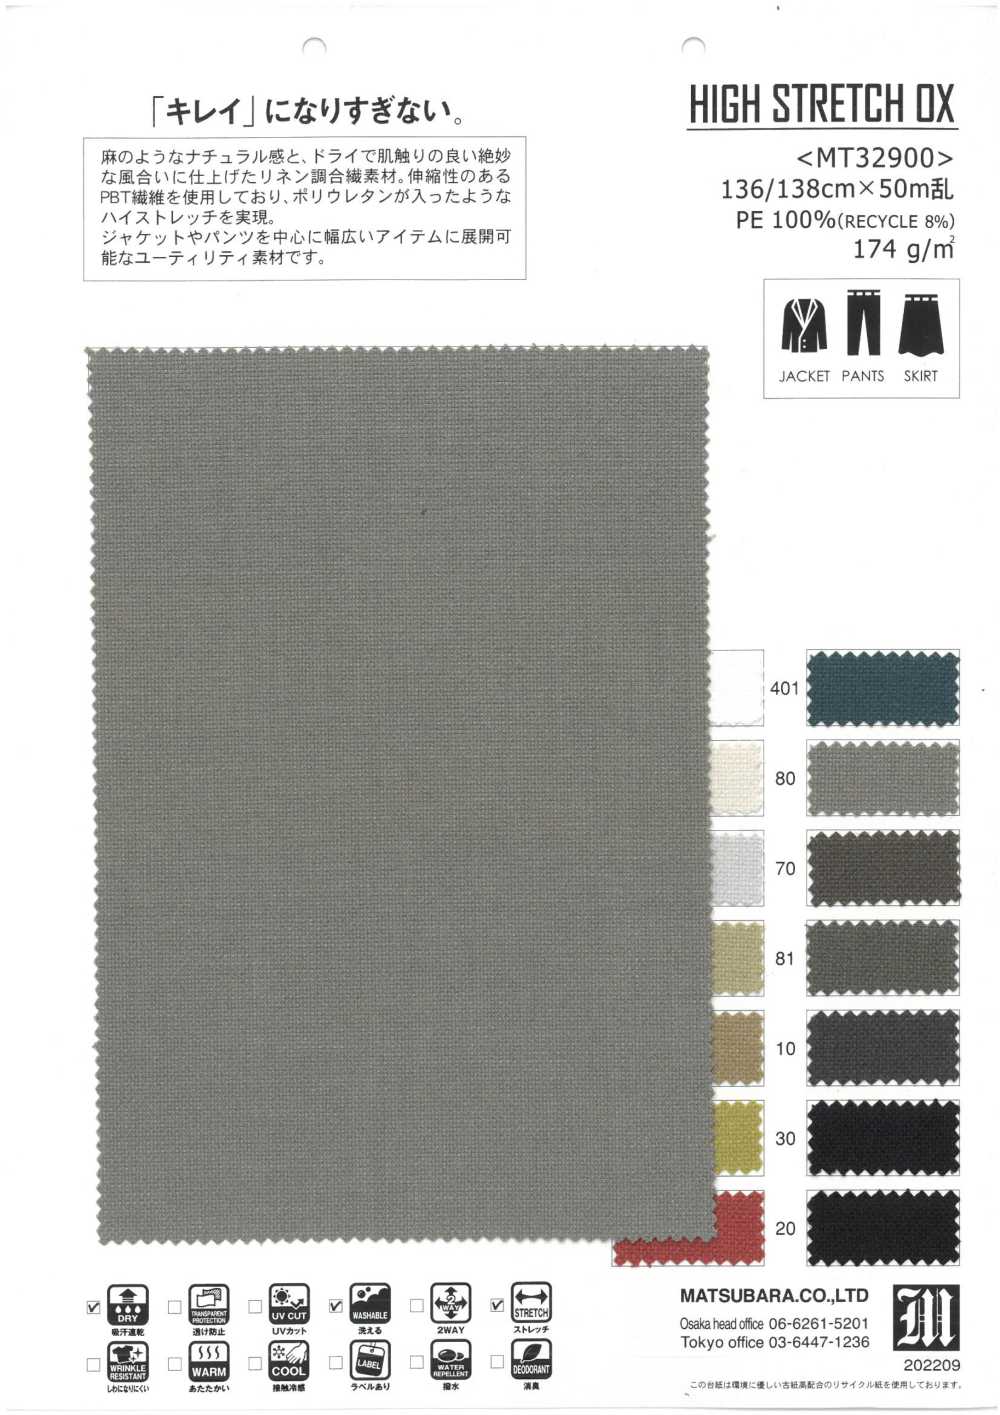 MT32900 HIGH STRETCH OX[Textile / Fabric] Matsubara